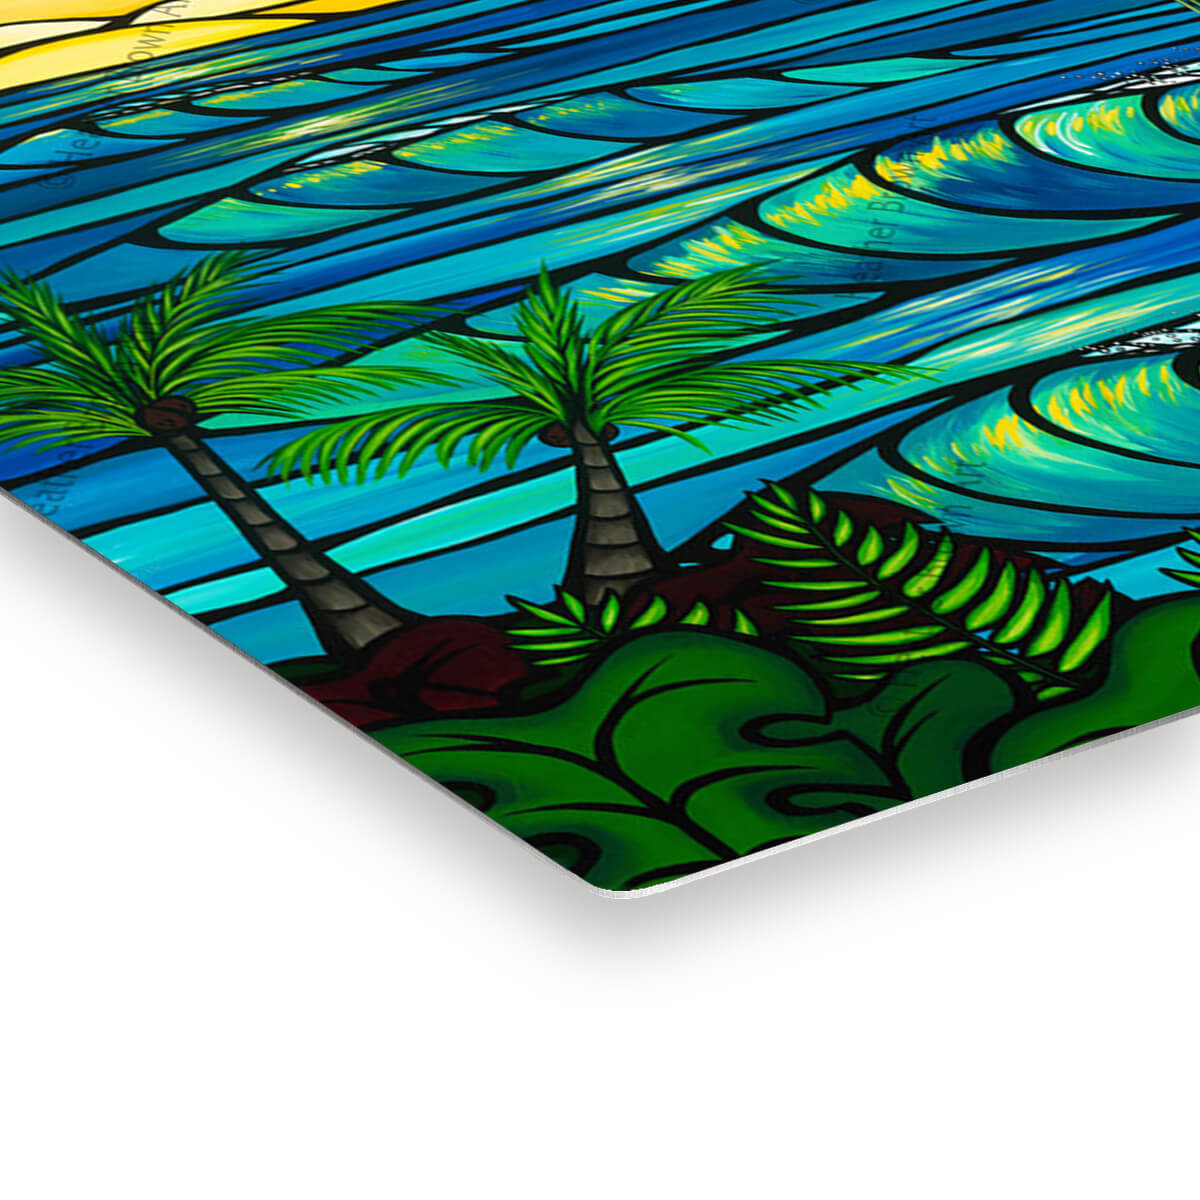 Sunset Swell metal print edge detail by Hawaii surf artist Heather Brown